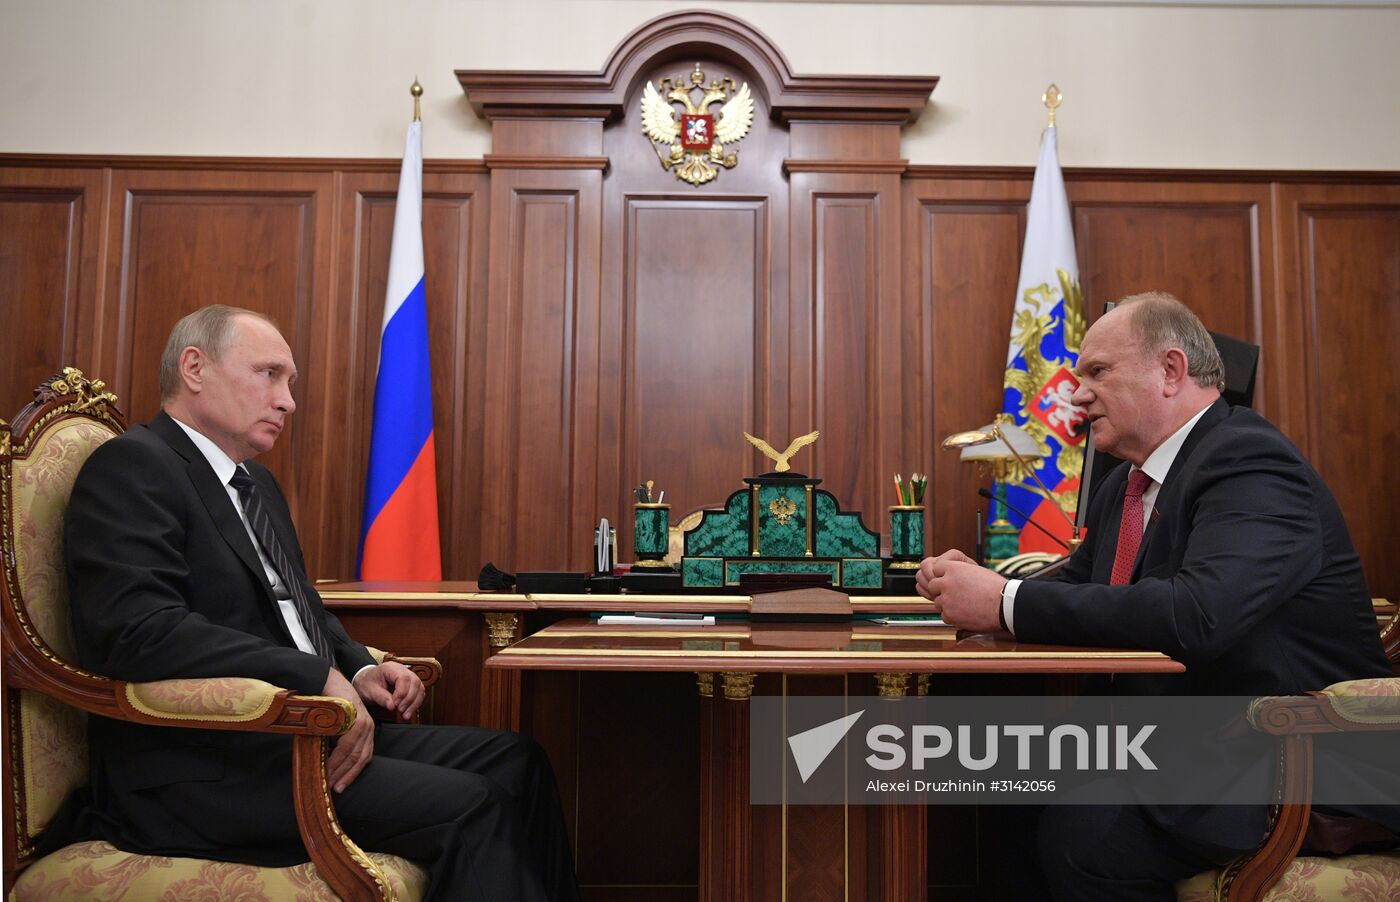 President Vladimir Putin meets with Communist Party leader Gennady Zyuganov